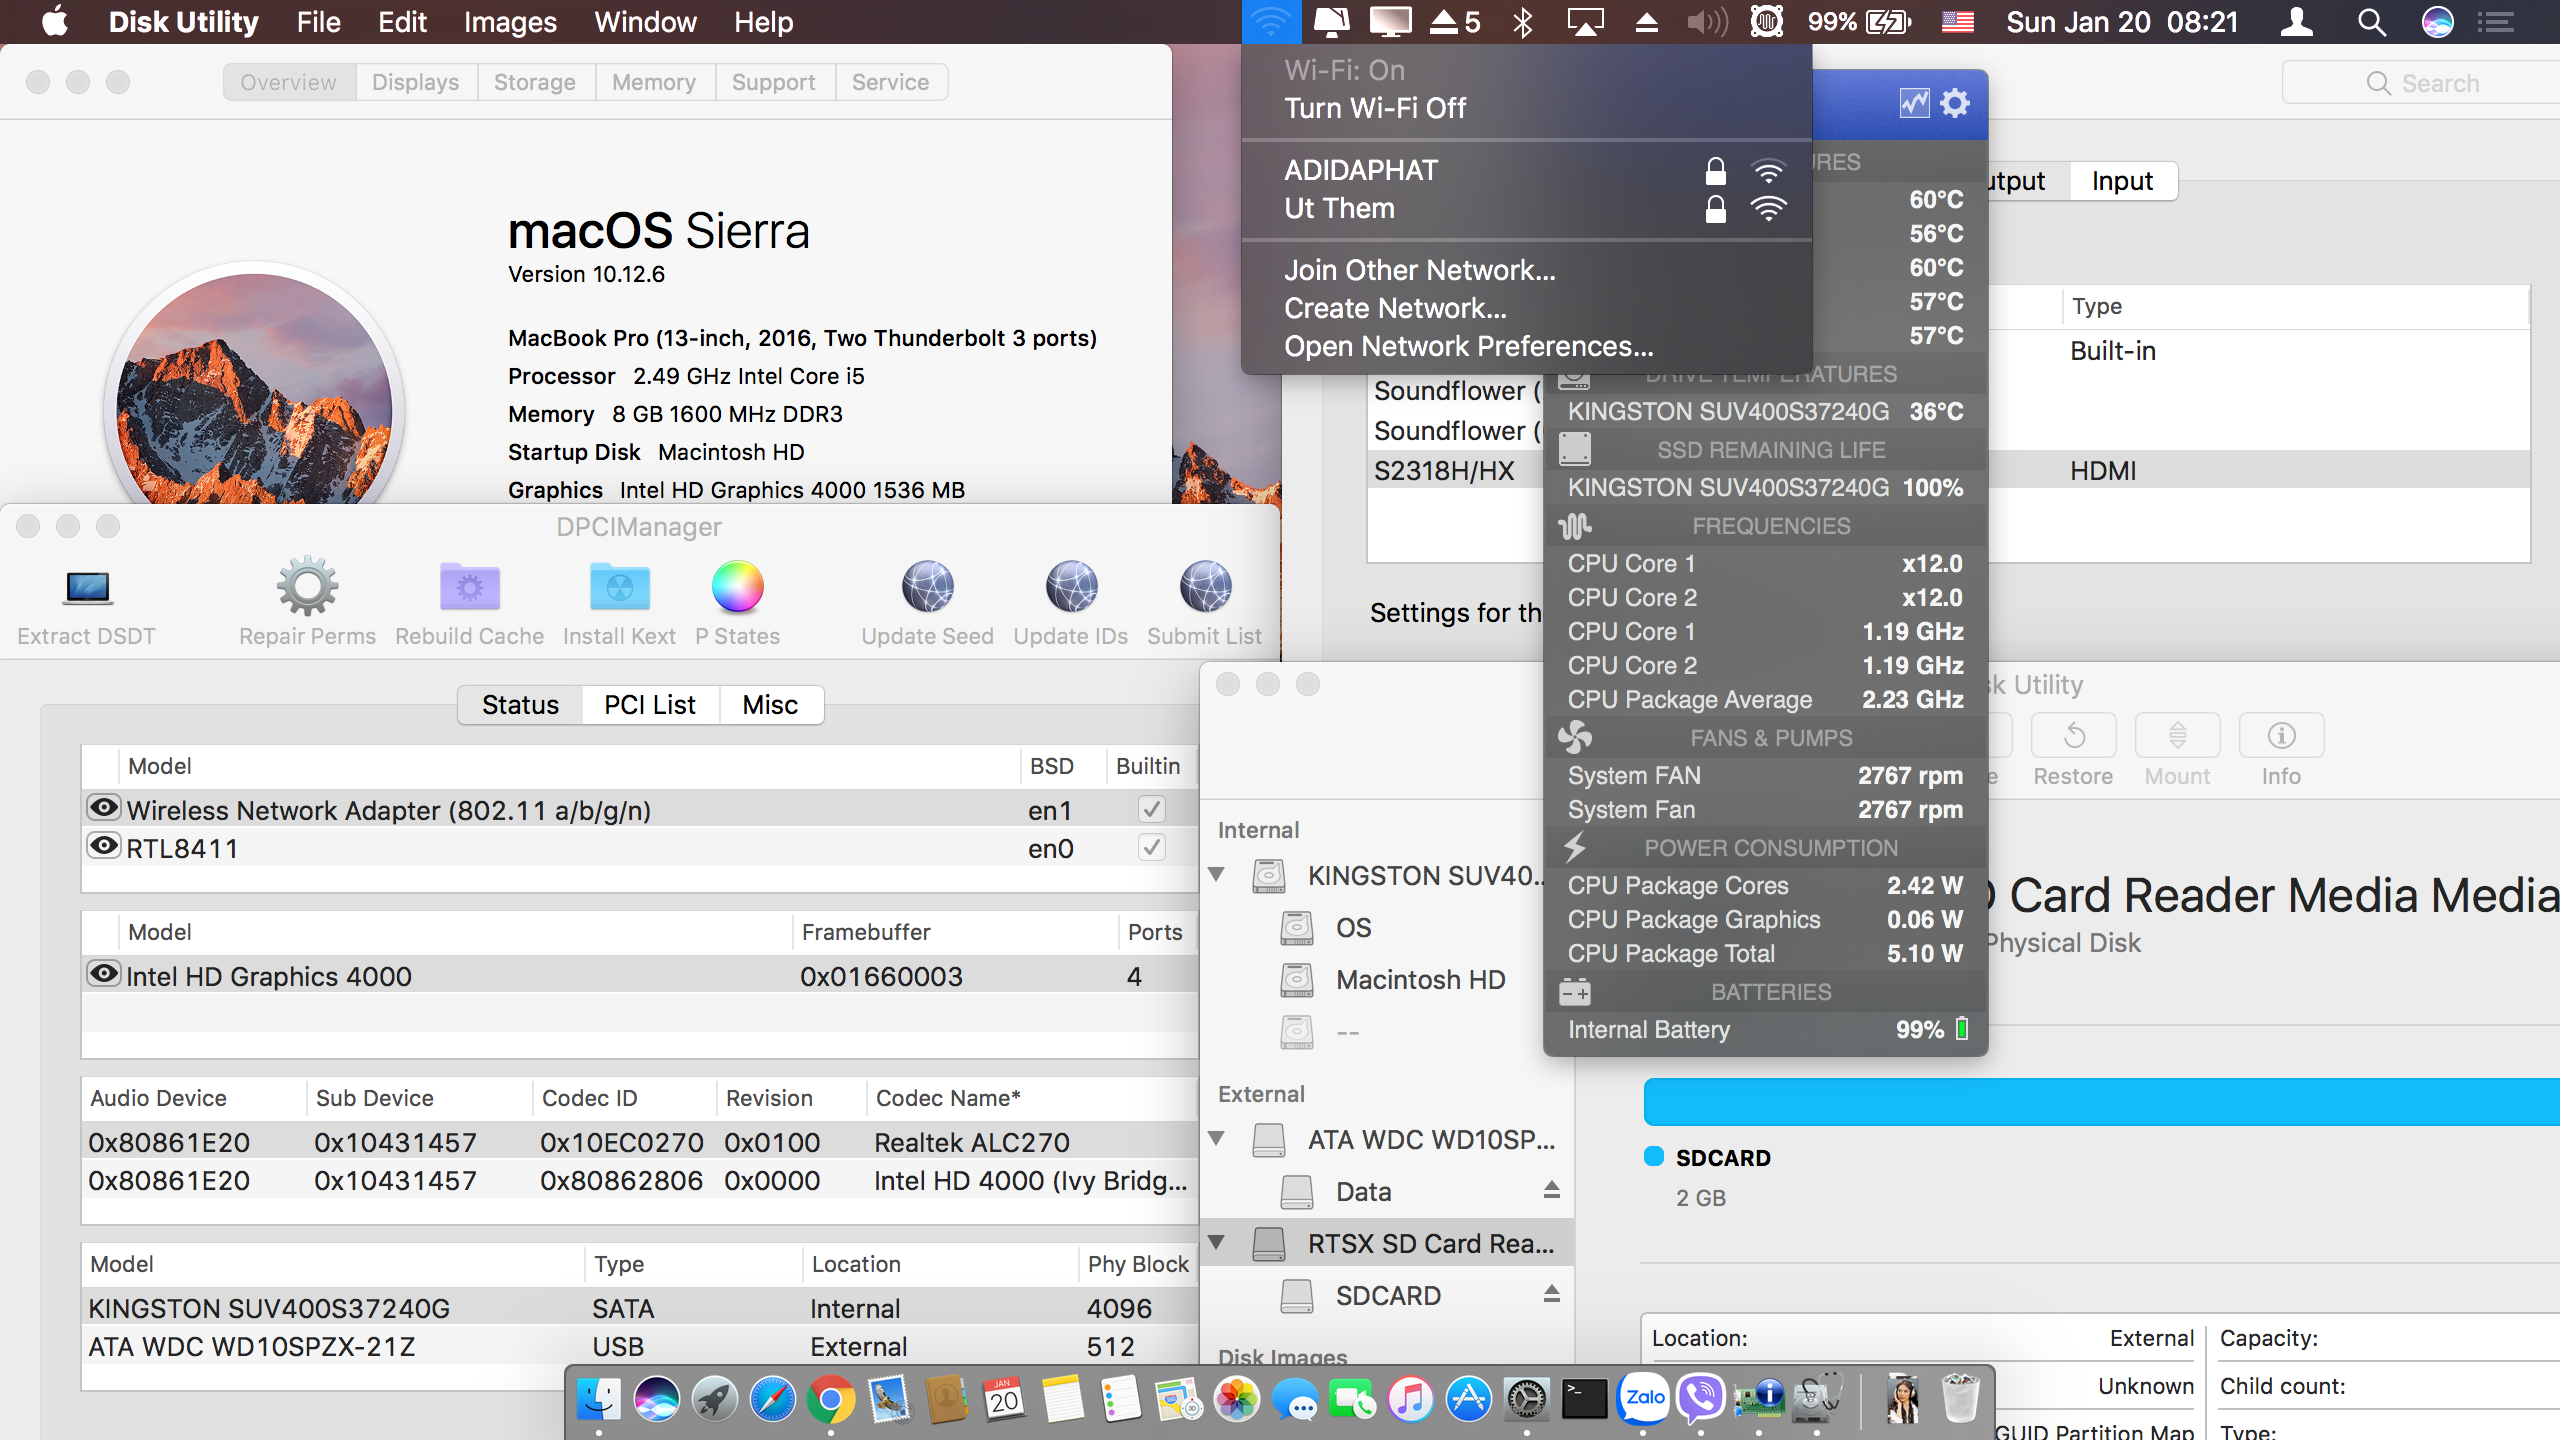 10.12.6 mac OS Sierra